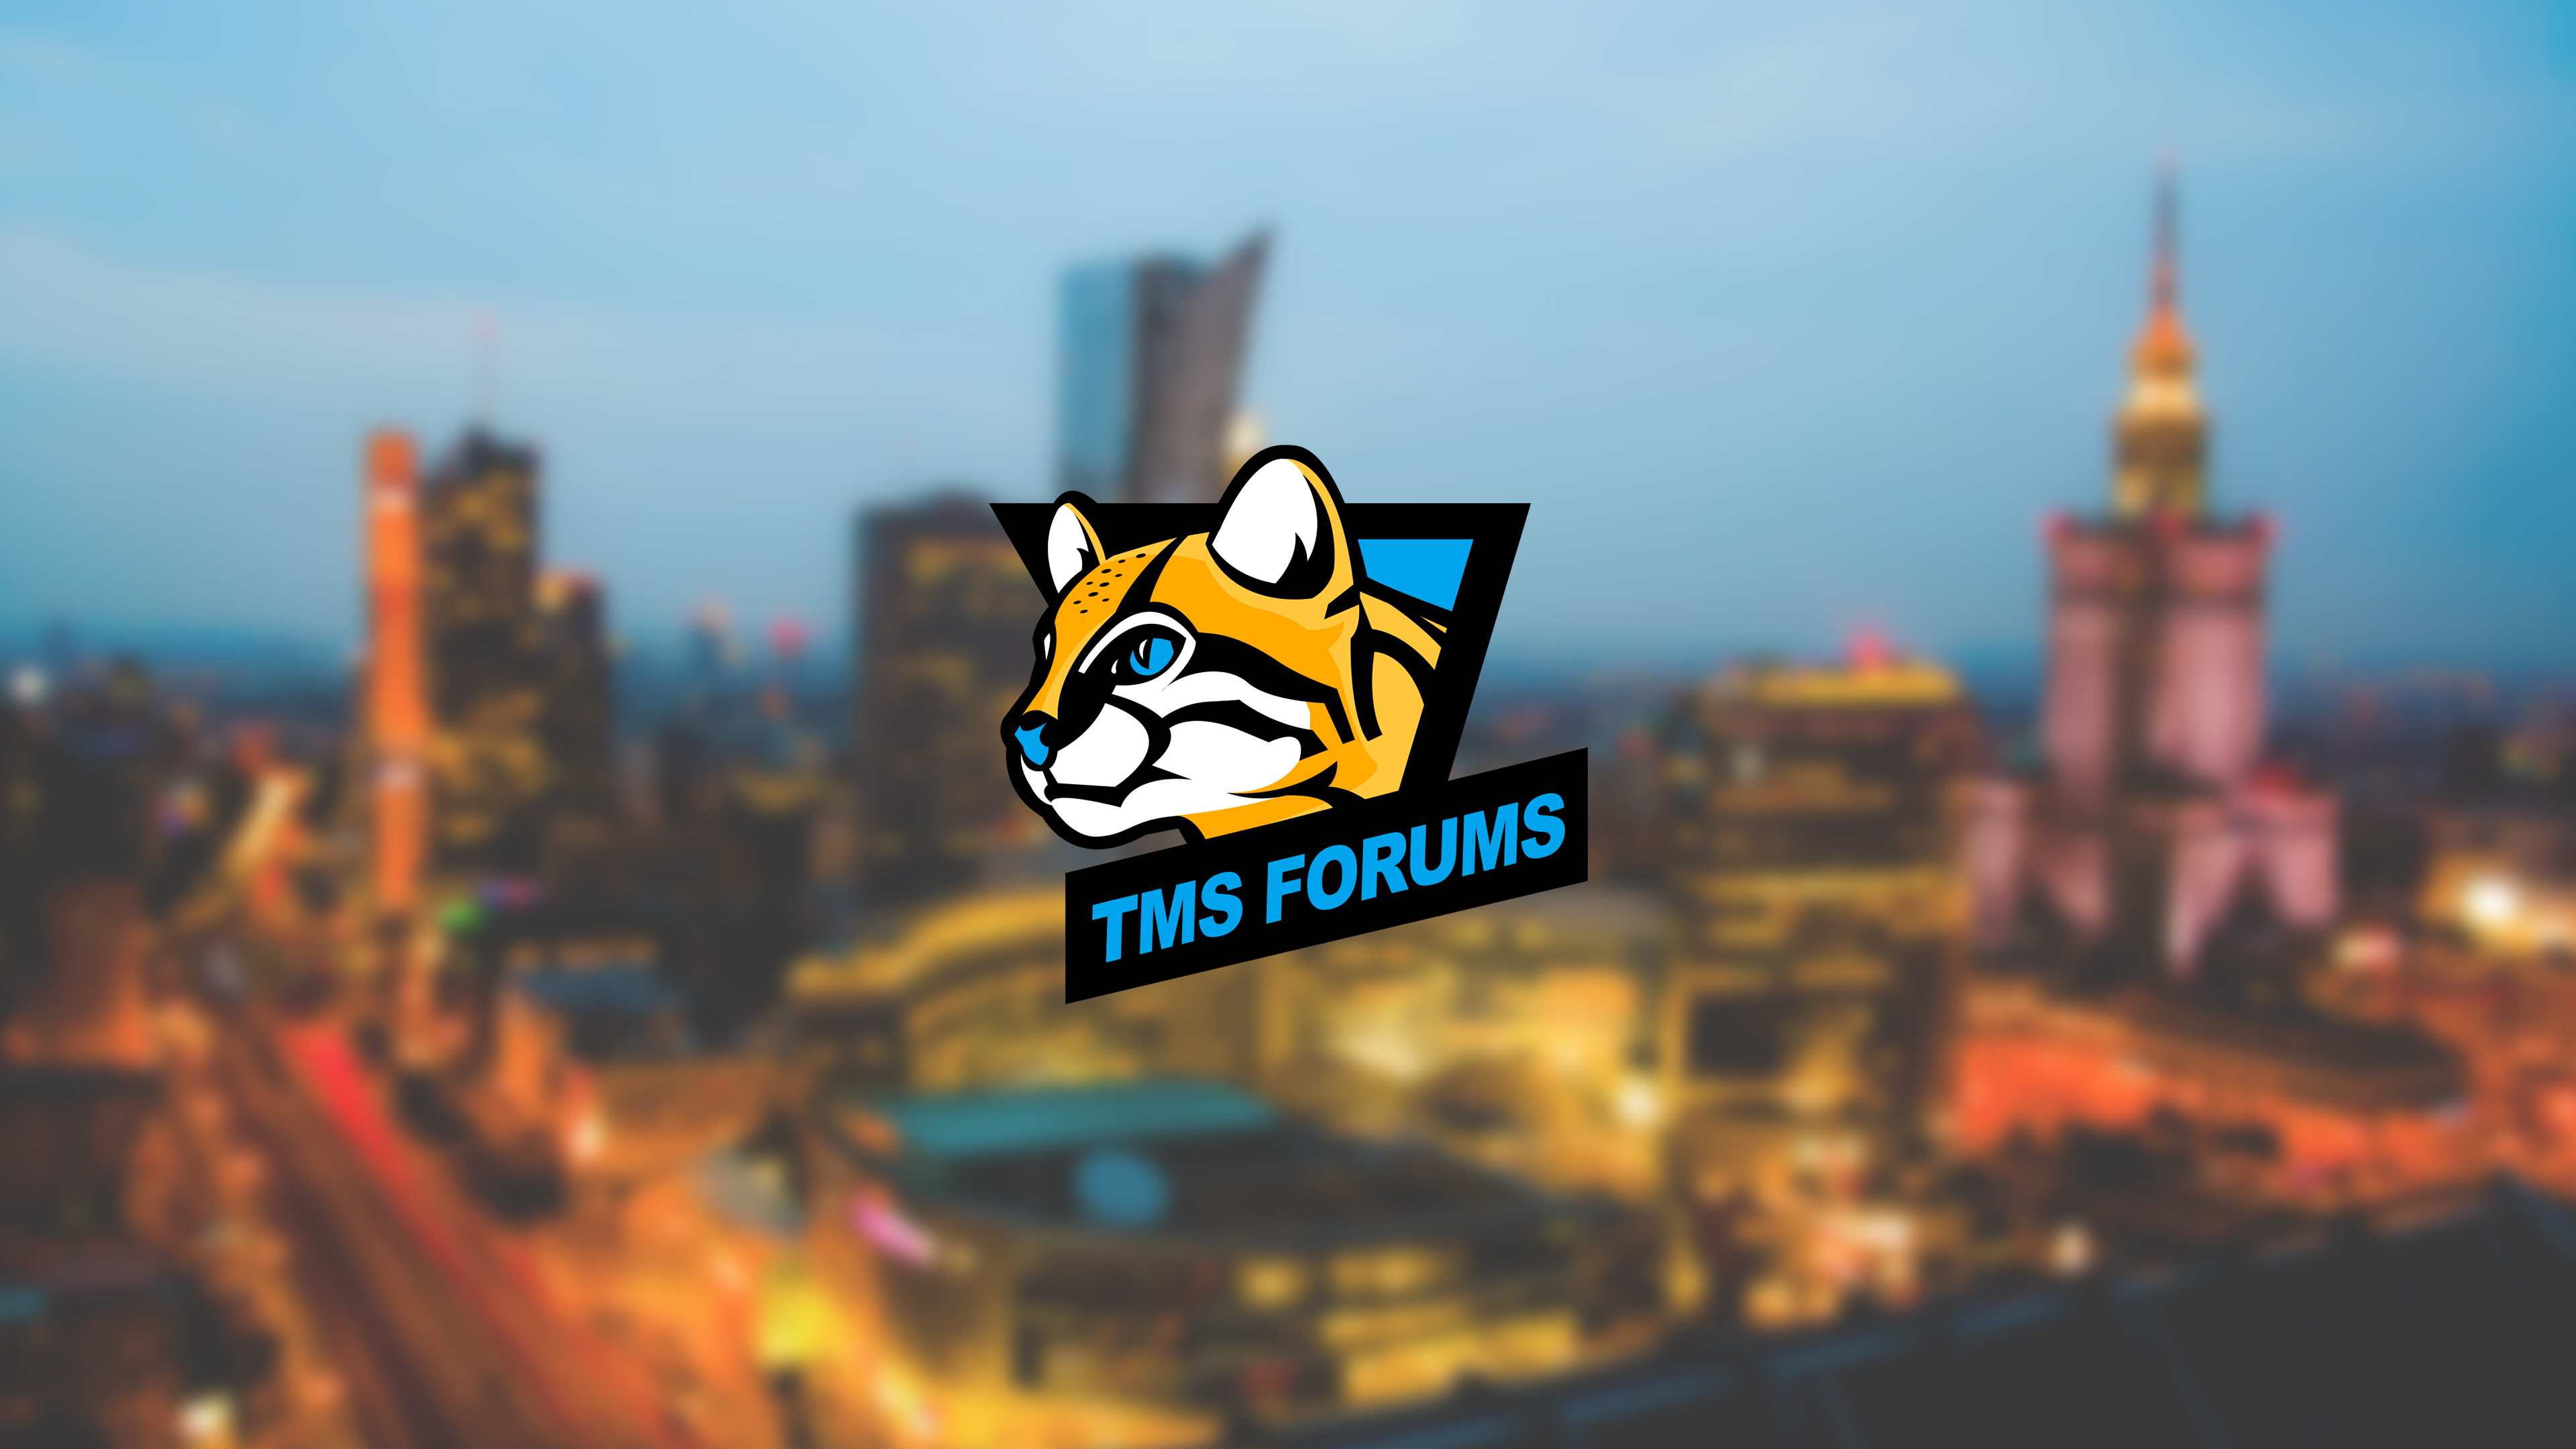 TMS Forums Logo Wallpaper City Warsaw.jpg